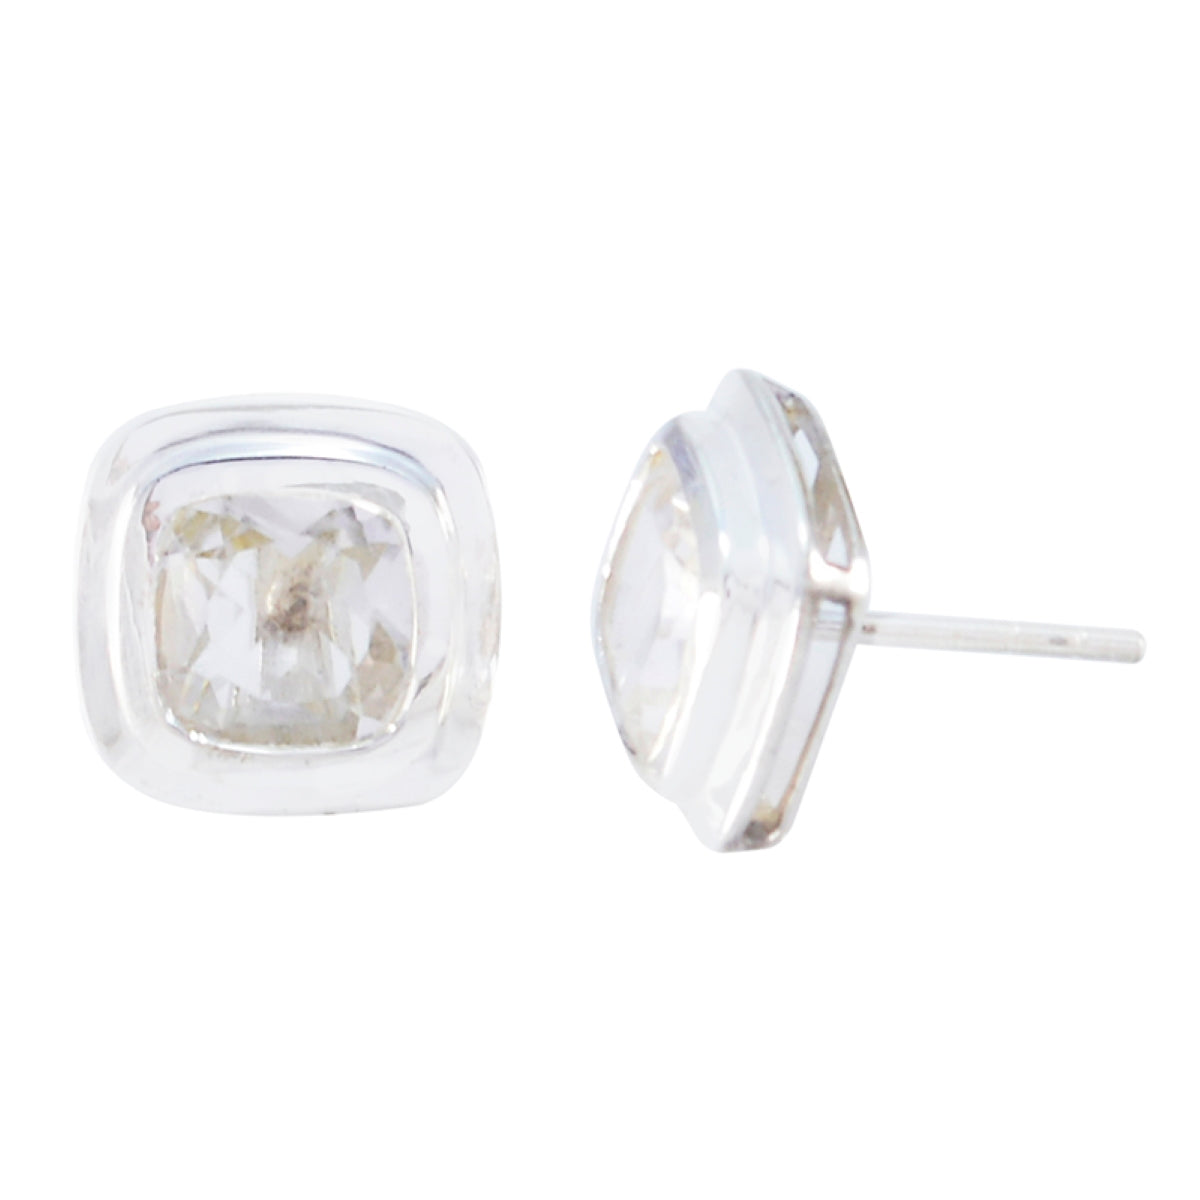 Riyo Genuine Gems Octogon Faceted White Crystal Quartz Silver Earring valentine's day gift